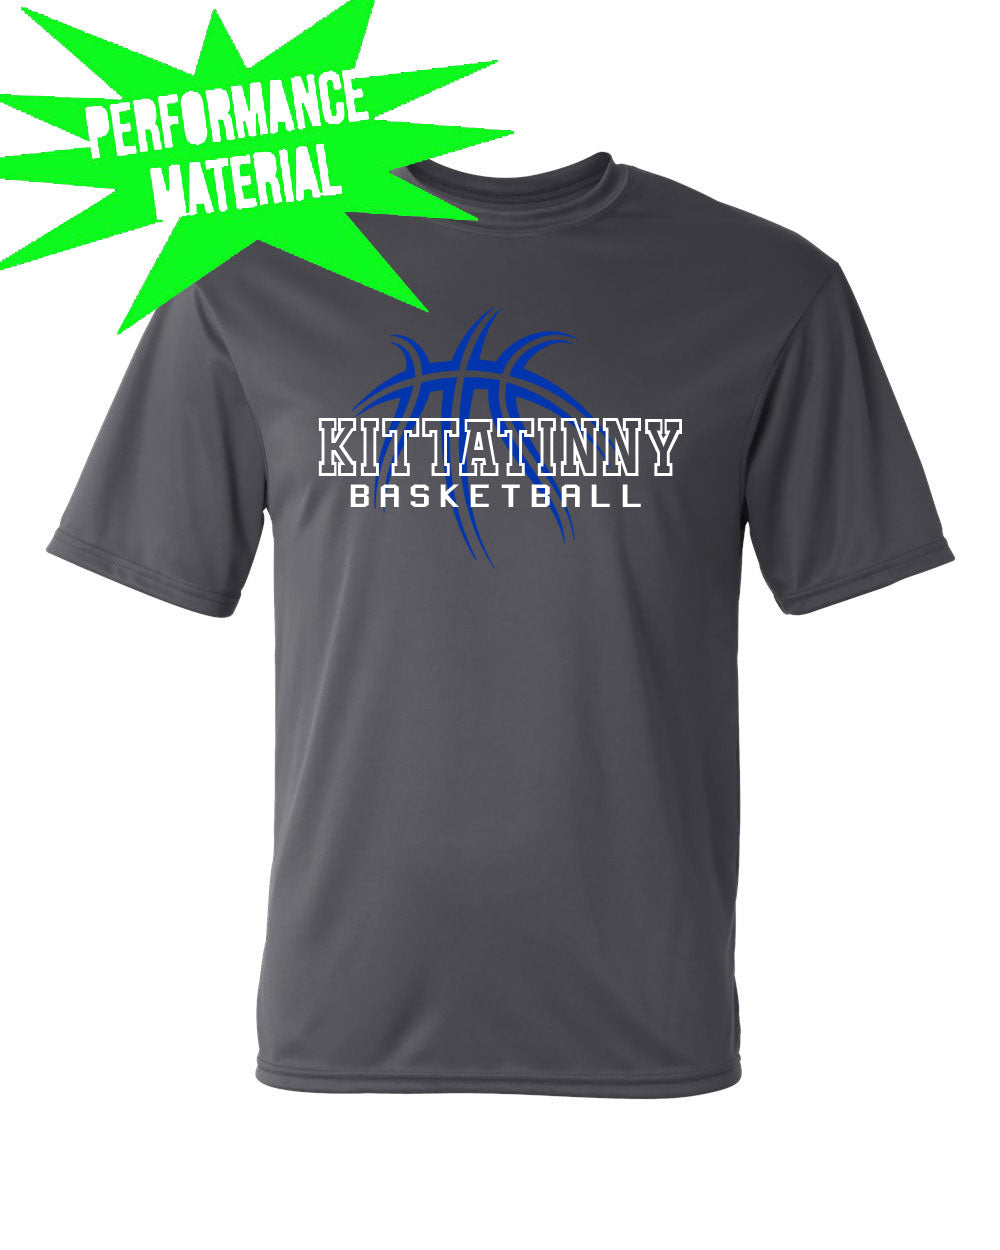 Kittatinny Basketball Performance Material T-Shirt Design 4